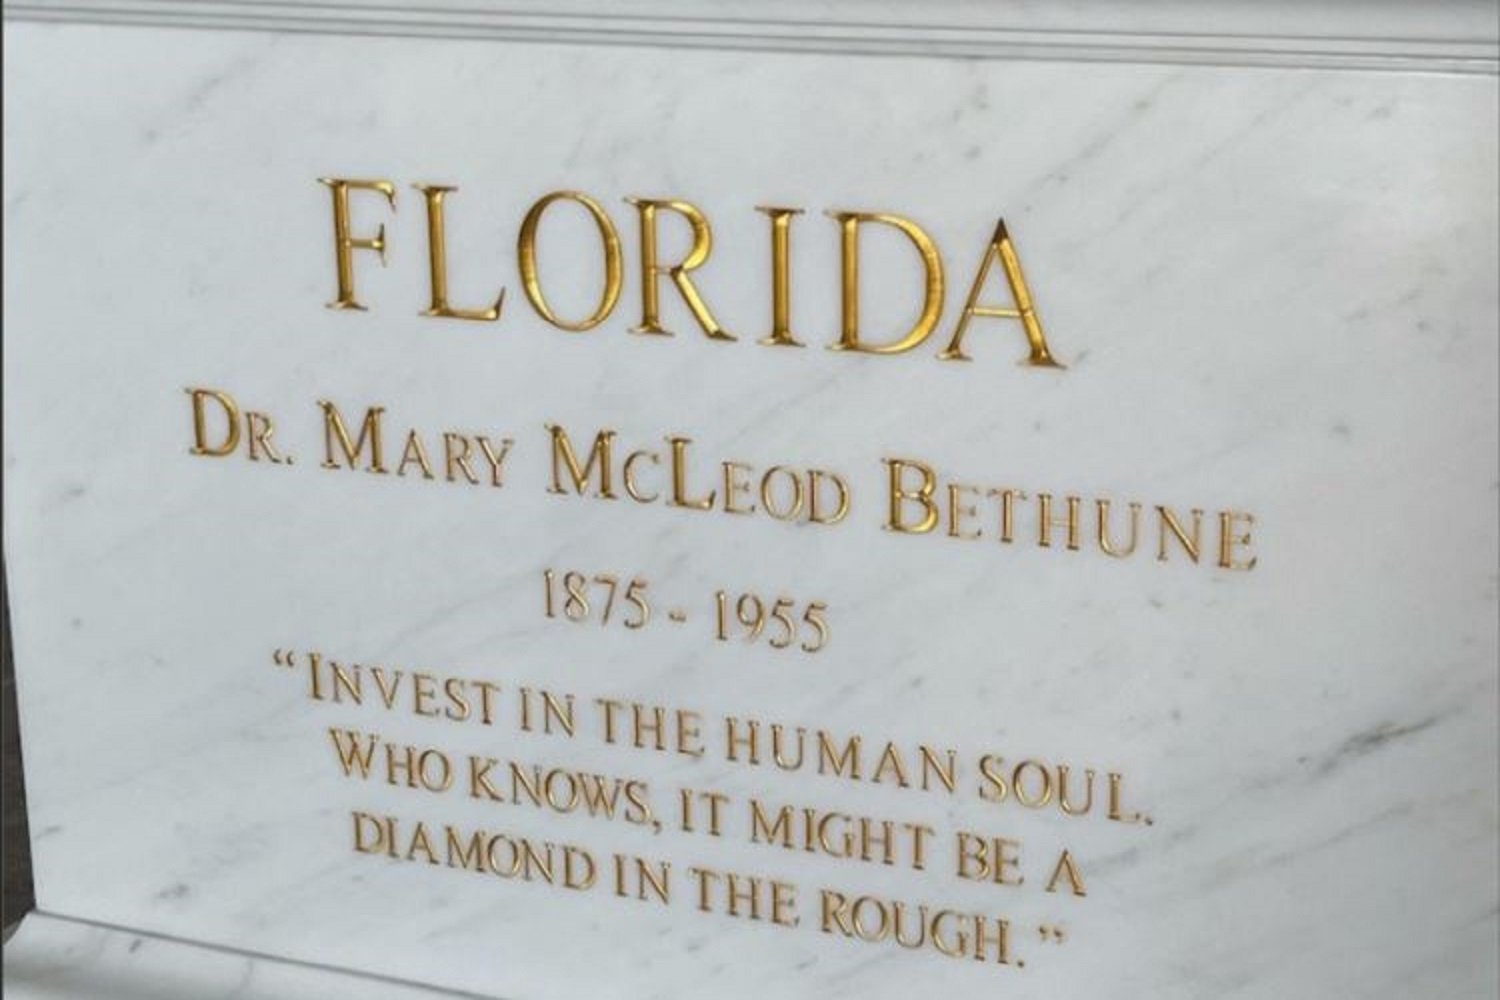 Dr. Mary McLeod Bethune statue inscription